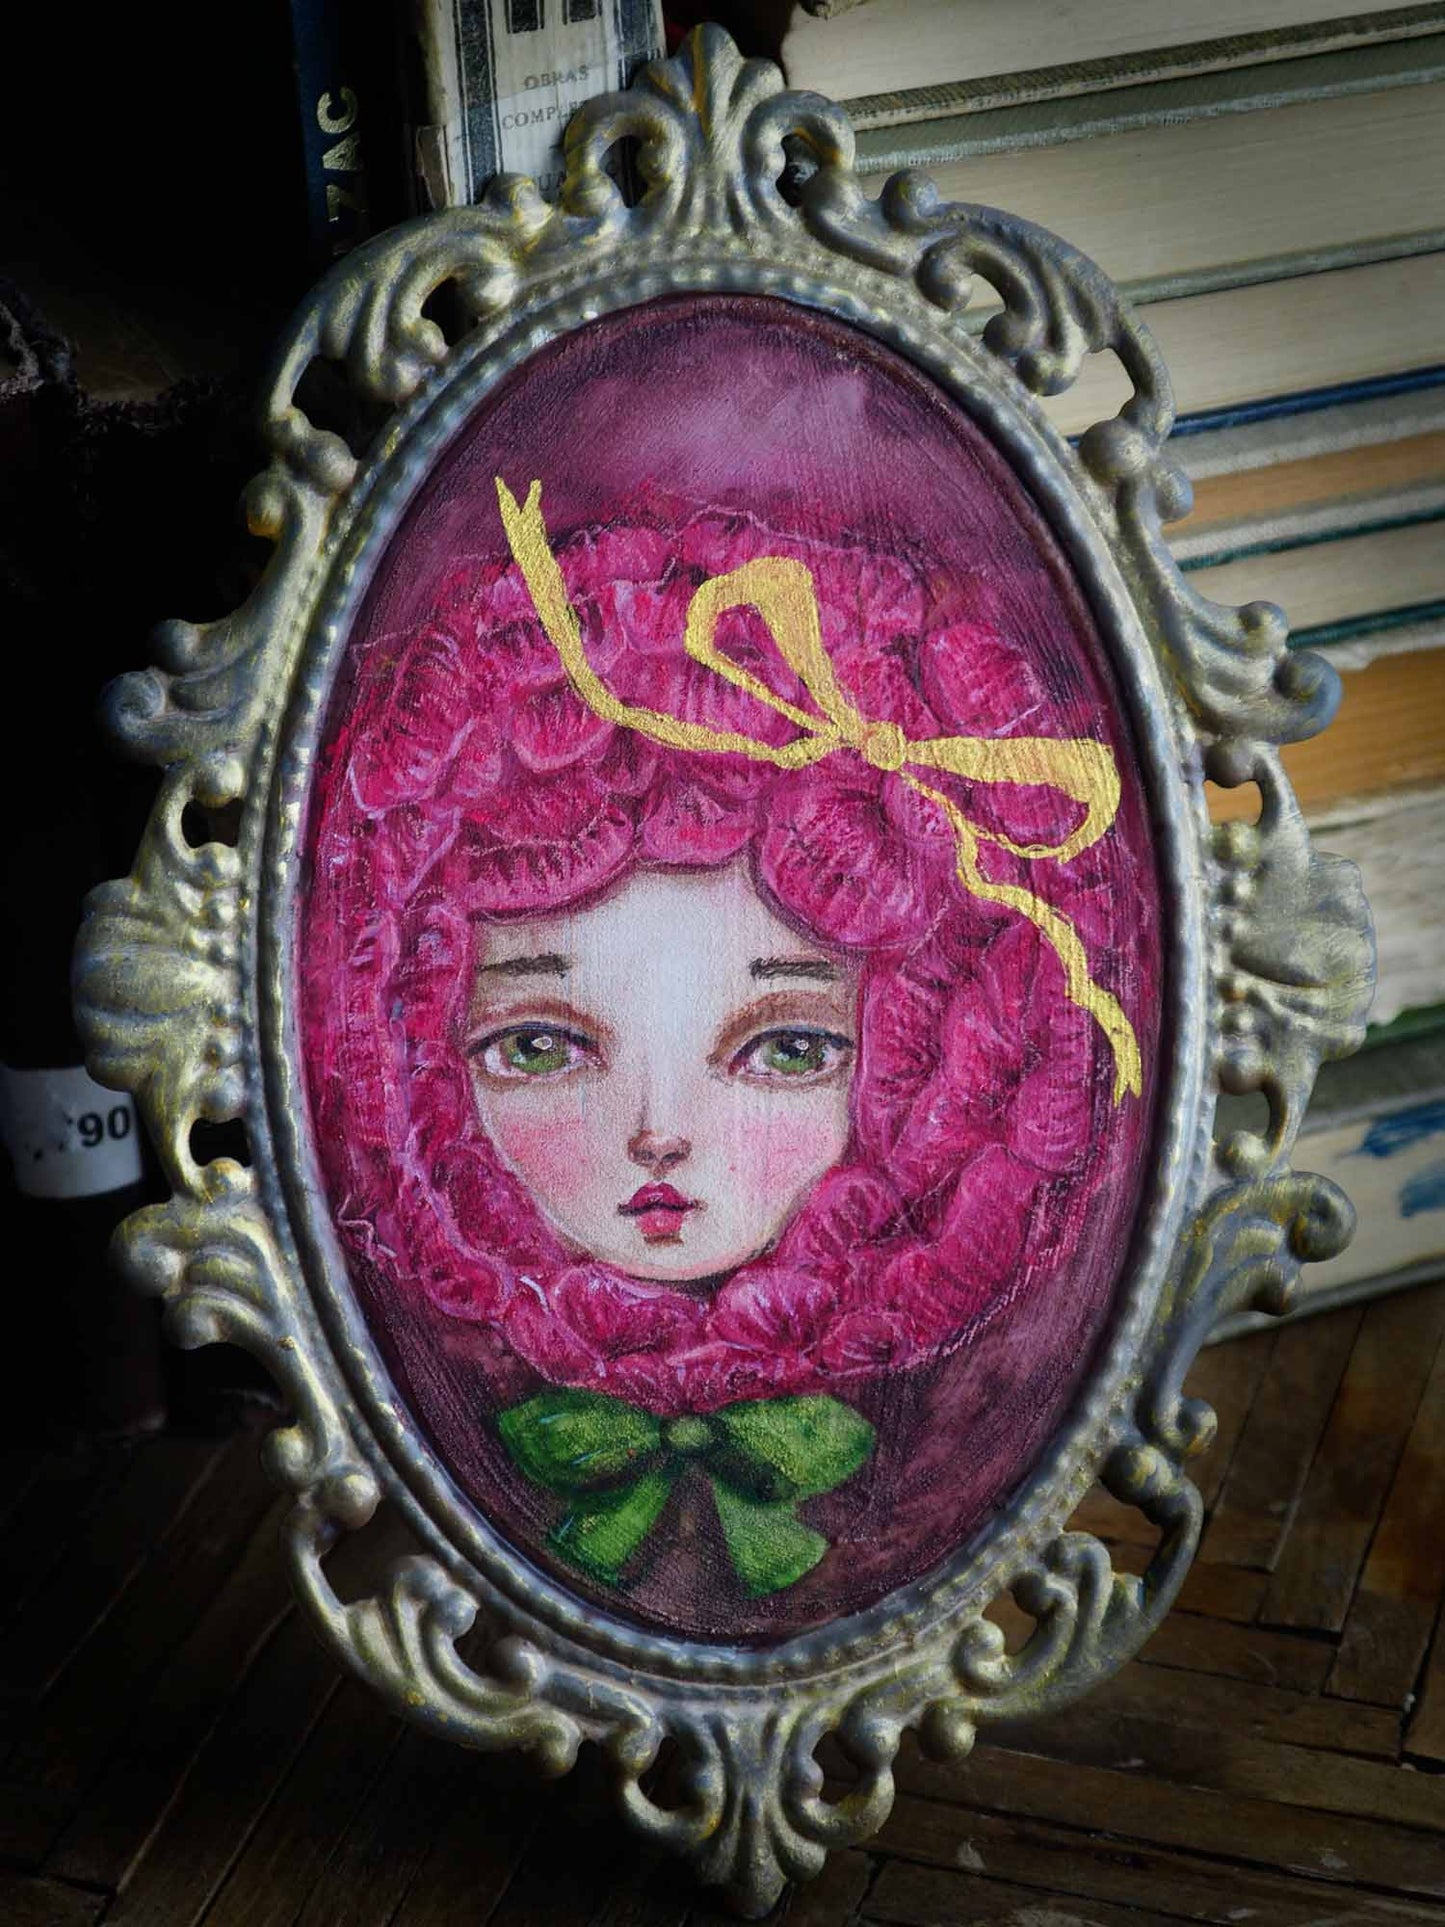 Danita pink rose cosplay watercolor painting little prince alice in wonderland garden